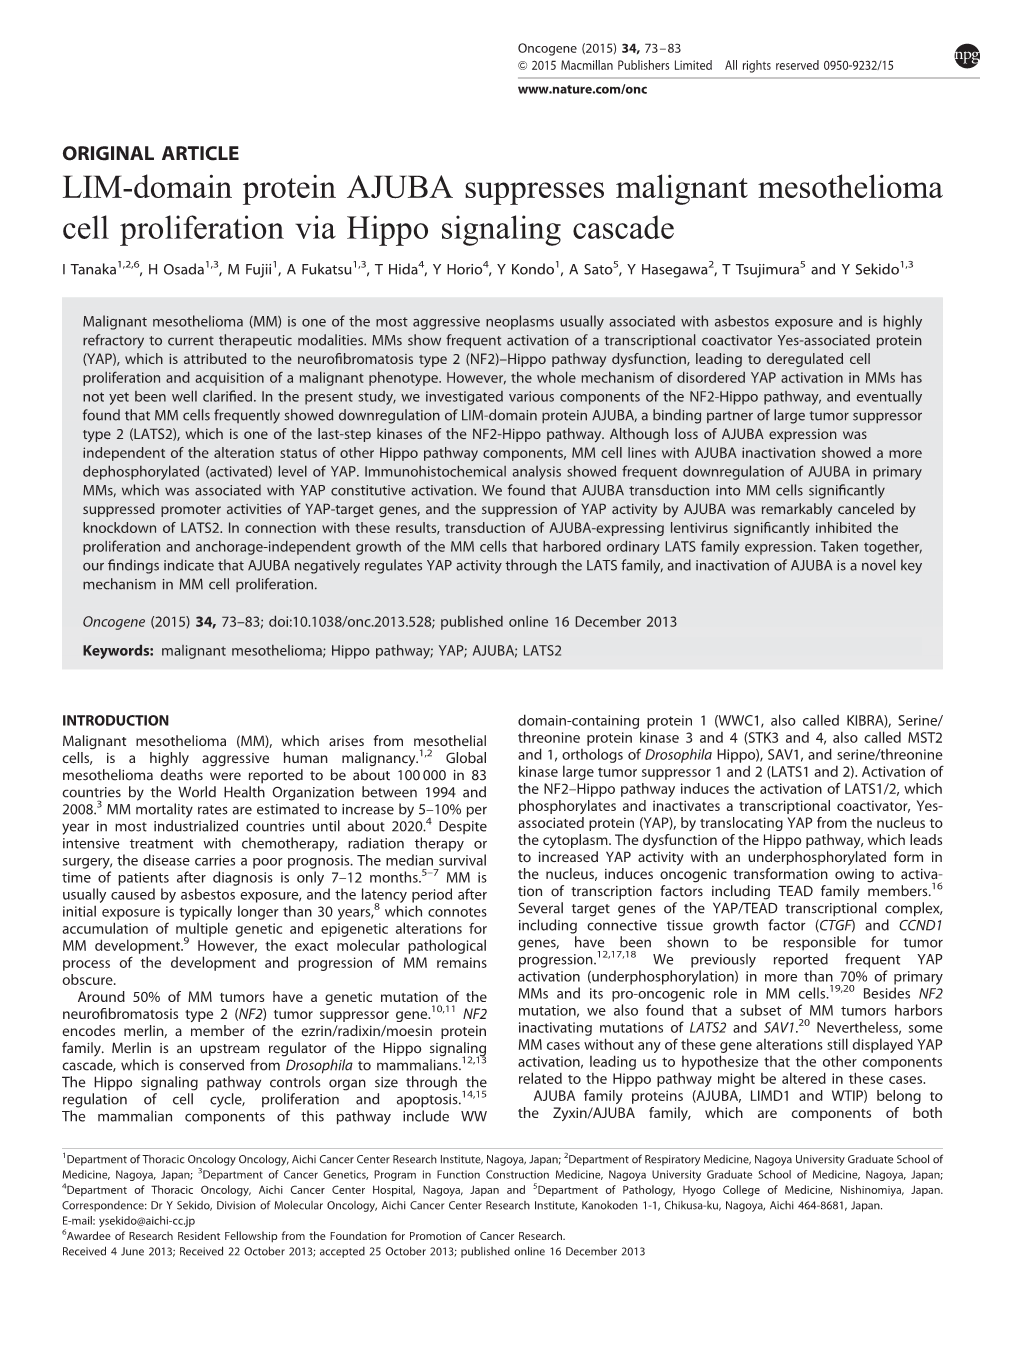 LIM-Domain Protein AJUBA Suppresses Malignant Mesothelioma Cell Proliferation Via Hippo Signaling Cascade